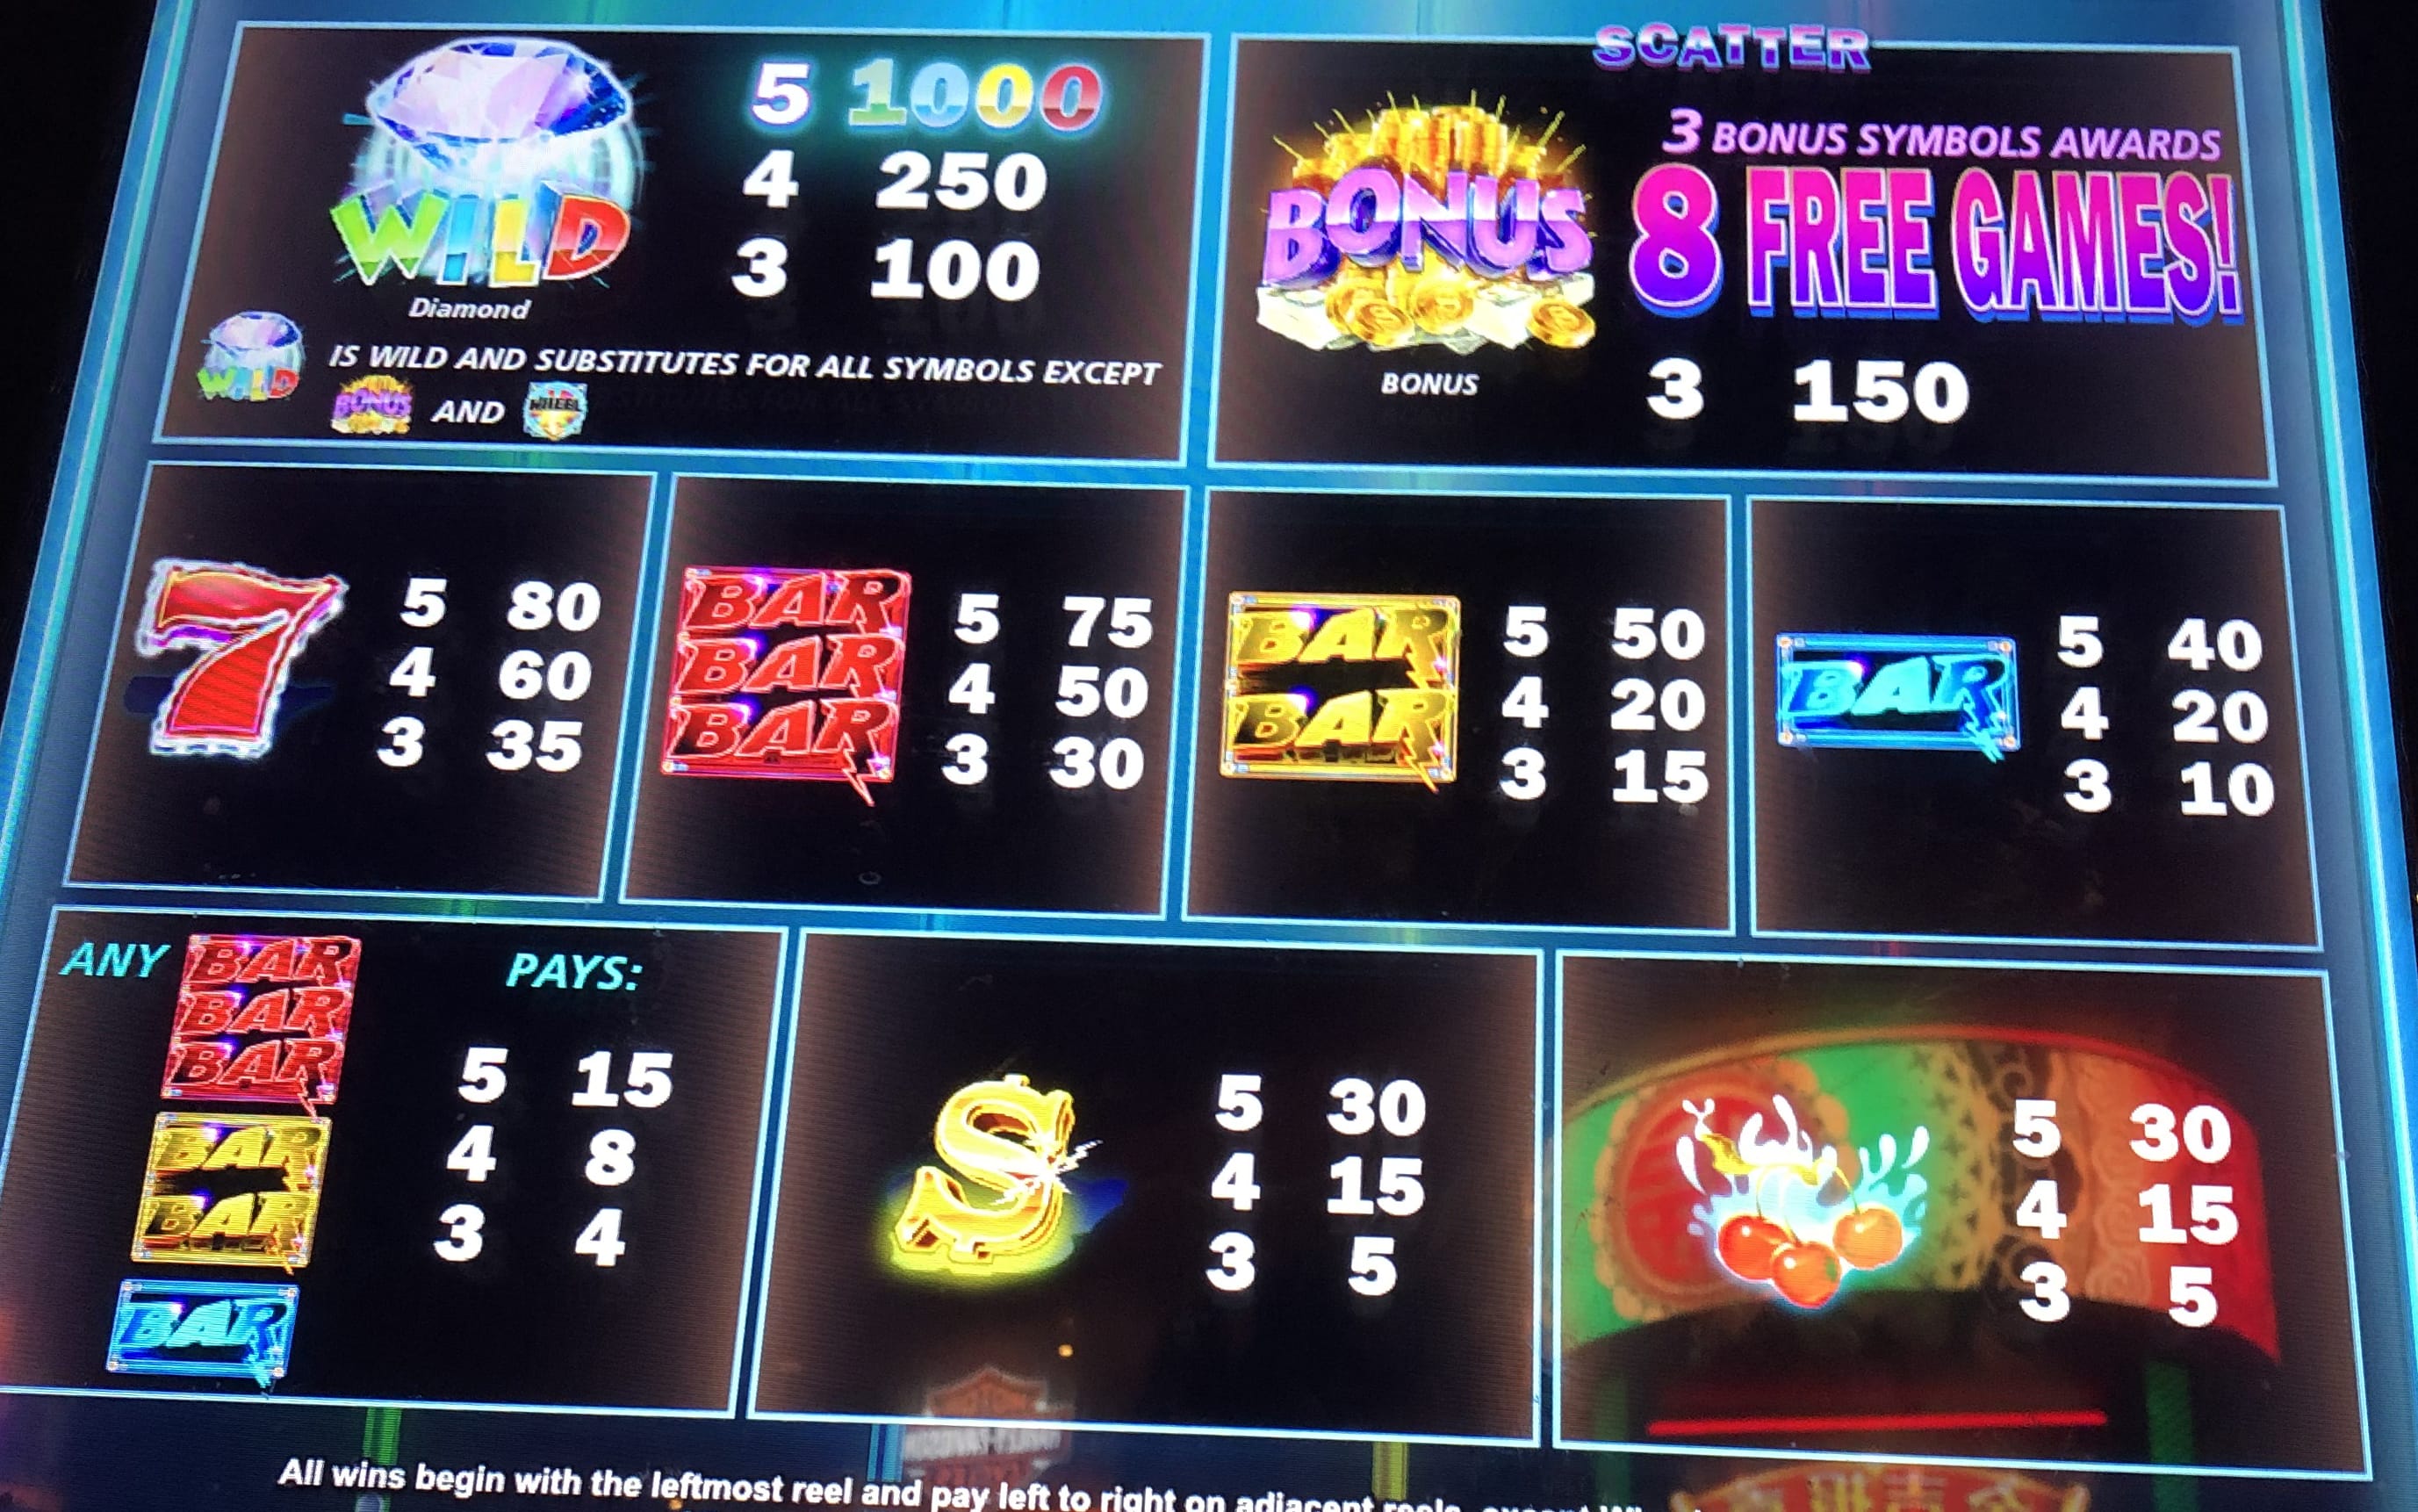 americoins slot machine payout table